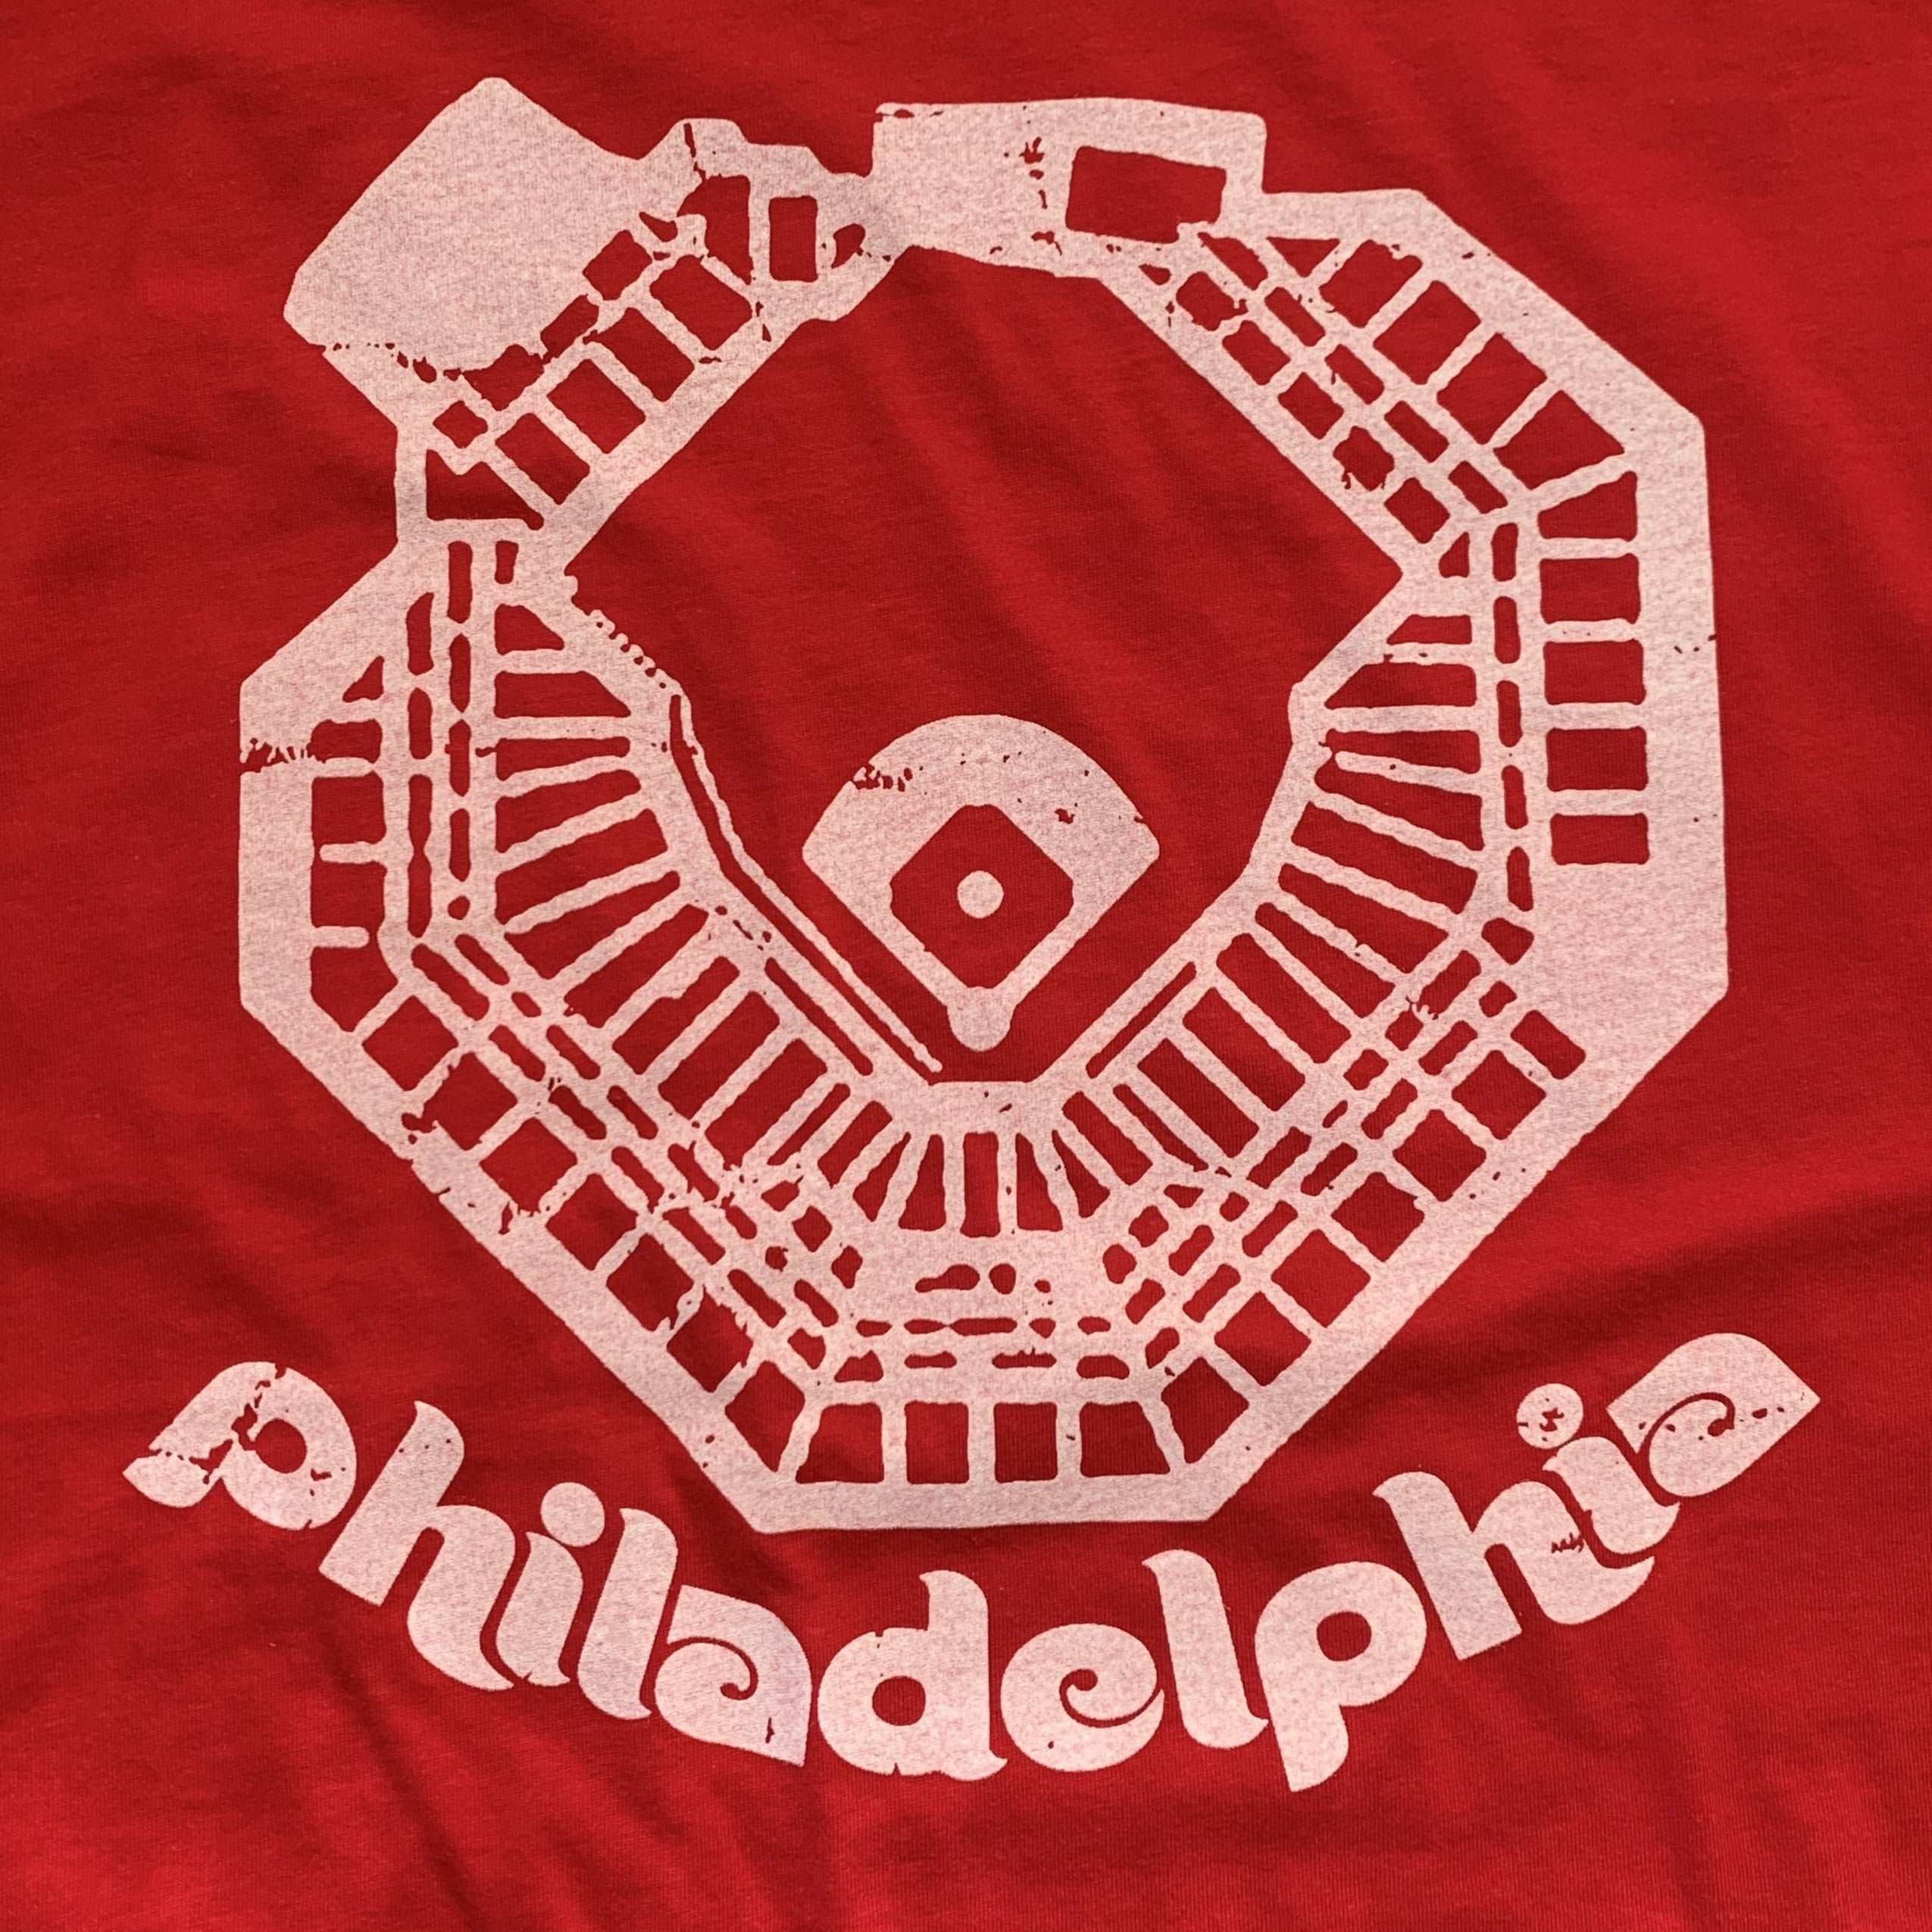 Philadelphia Ballpark Tee